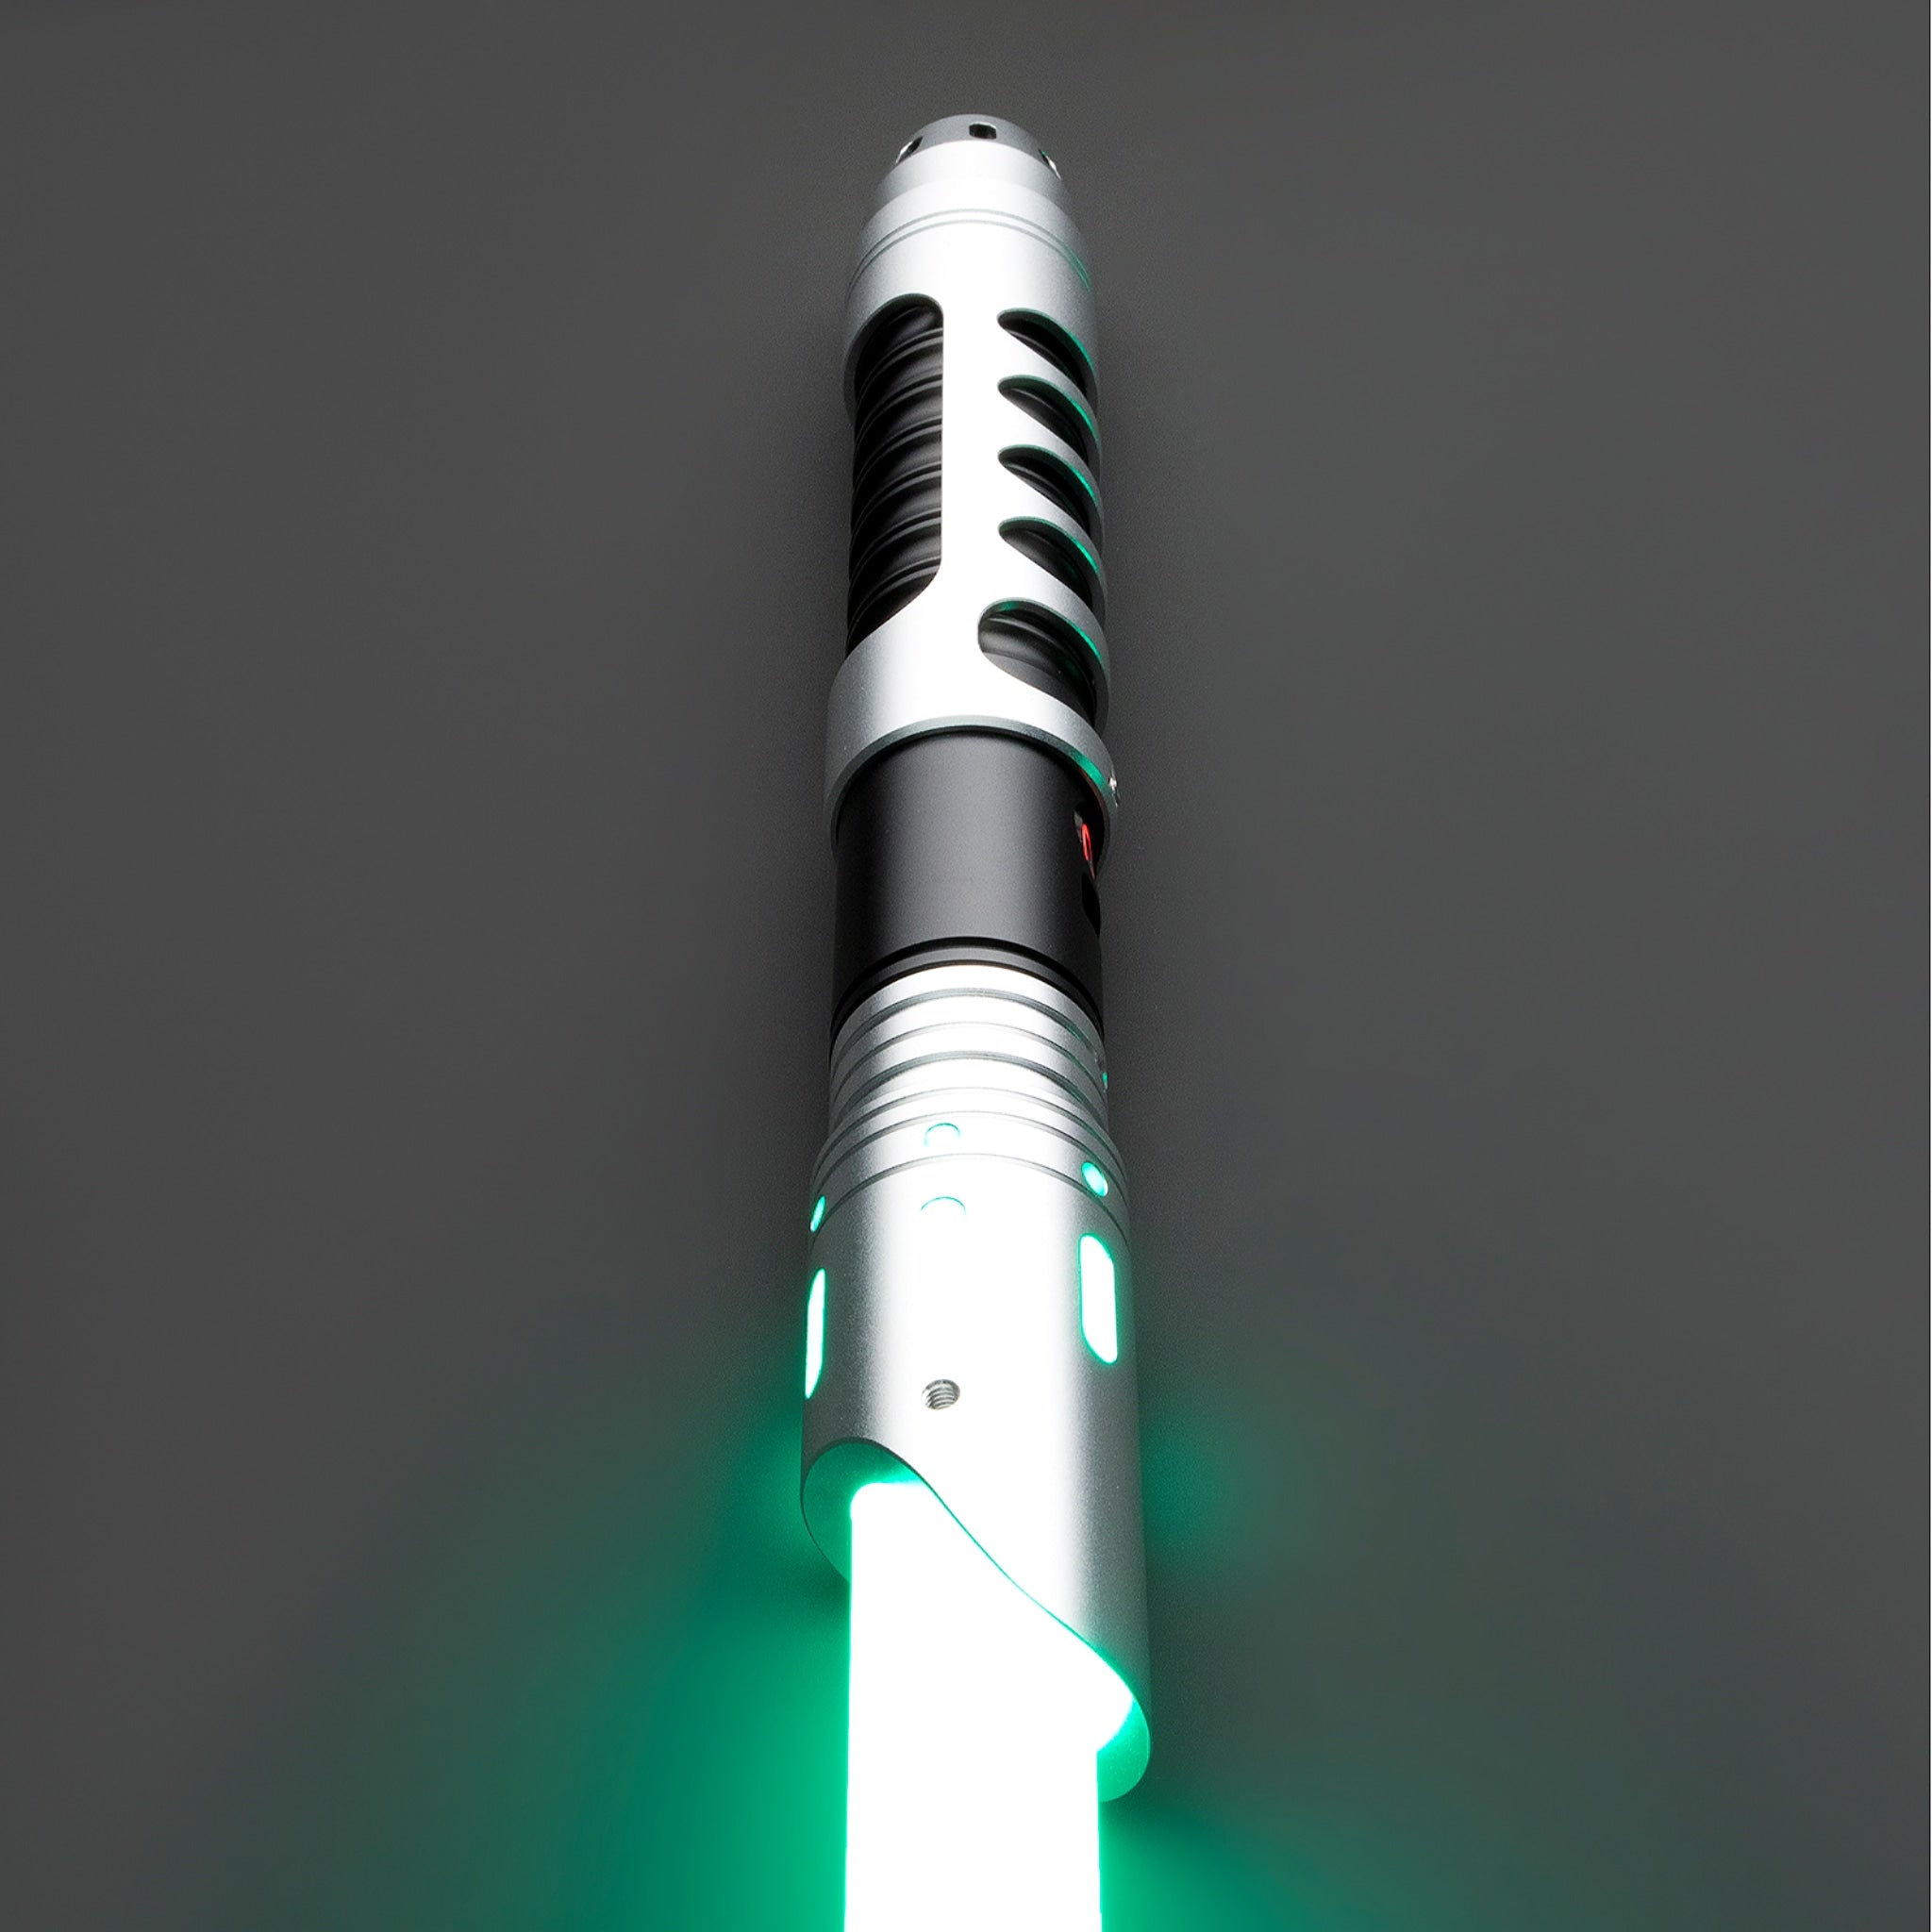 Star Wars No.109 Xenopixel Silver Combat Lightsaber RGB Replica